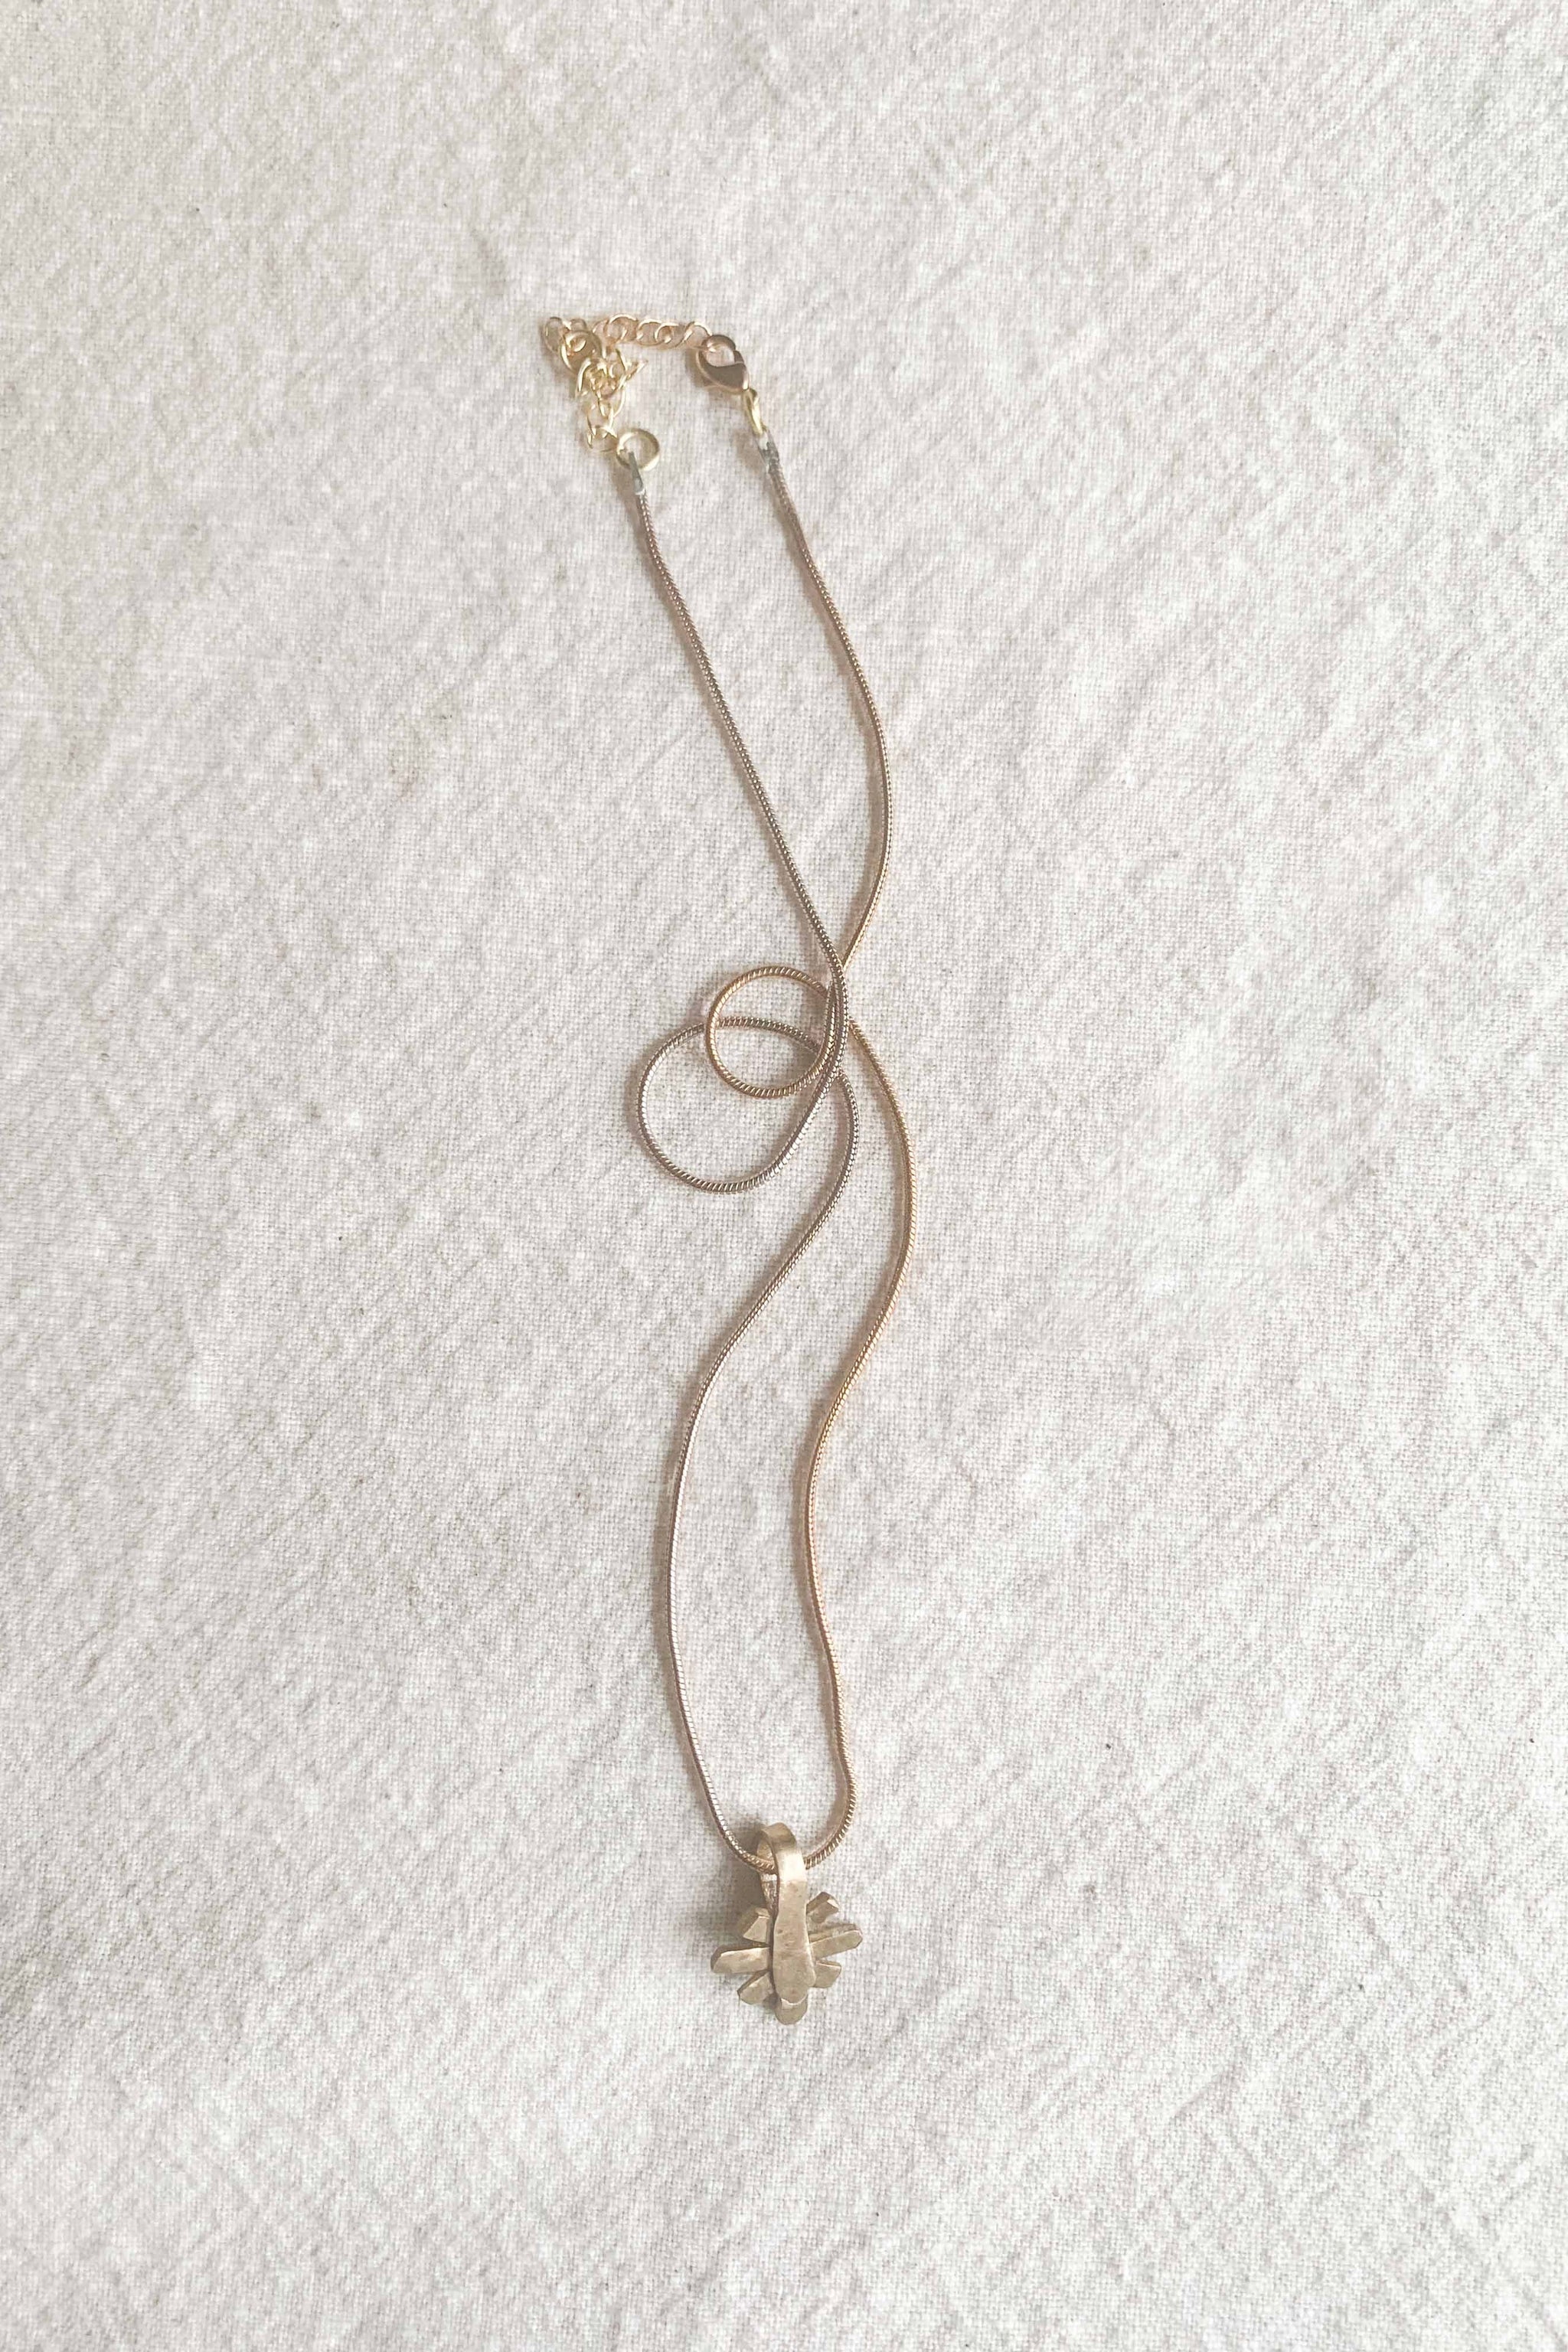 Manipura Necklace